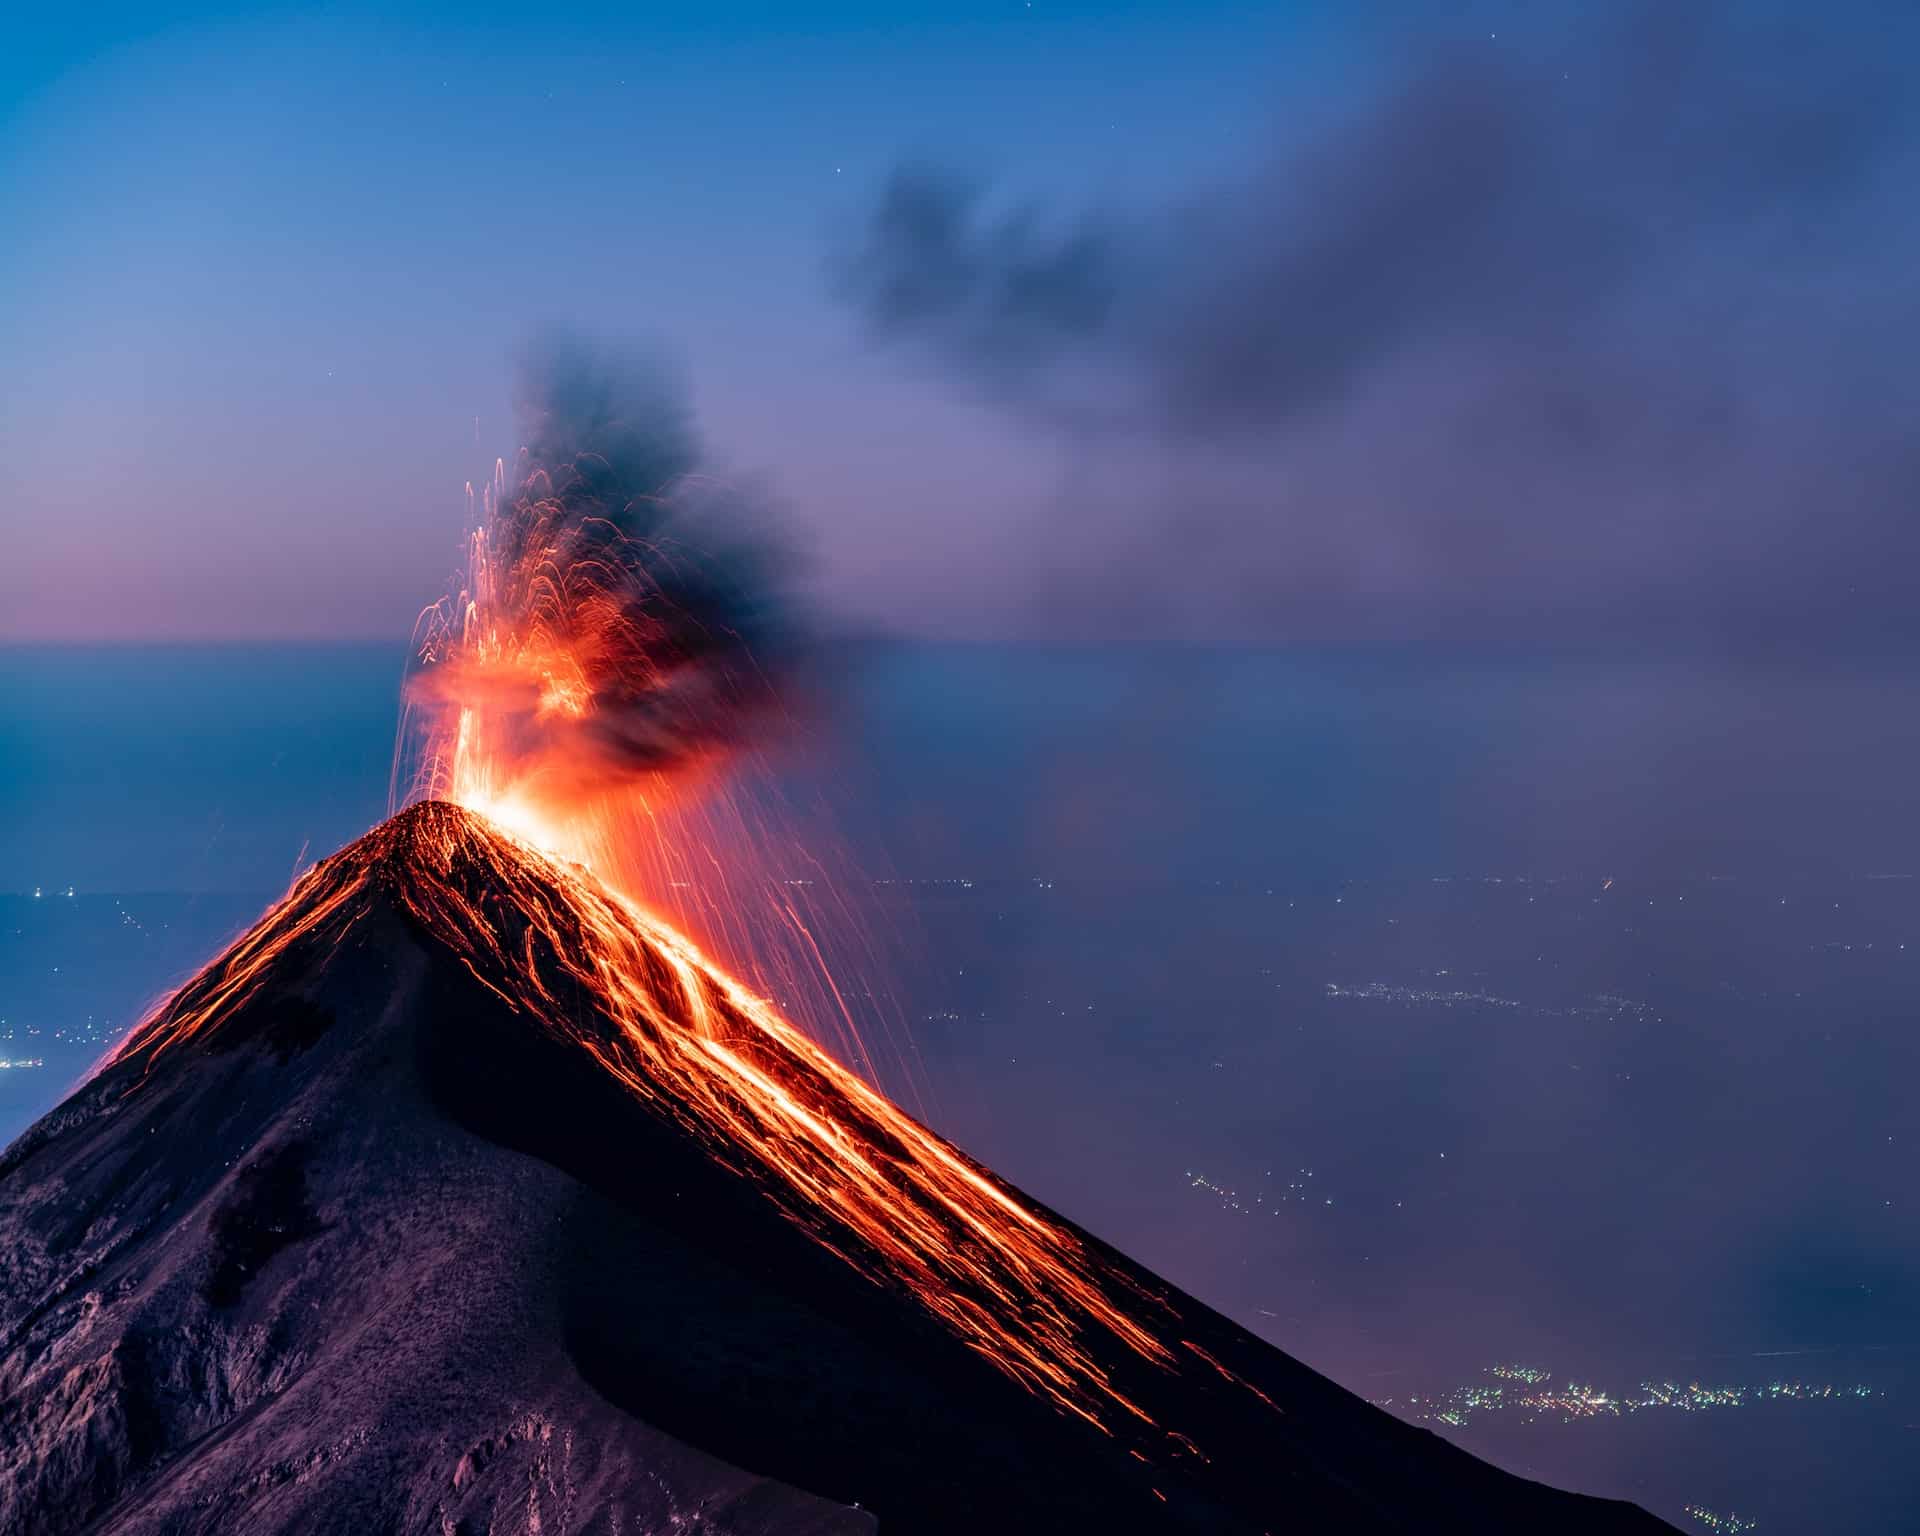 vulkankitoresek tomeges kihalas eghajlatvaltozas